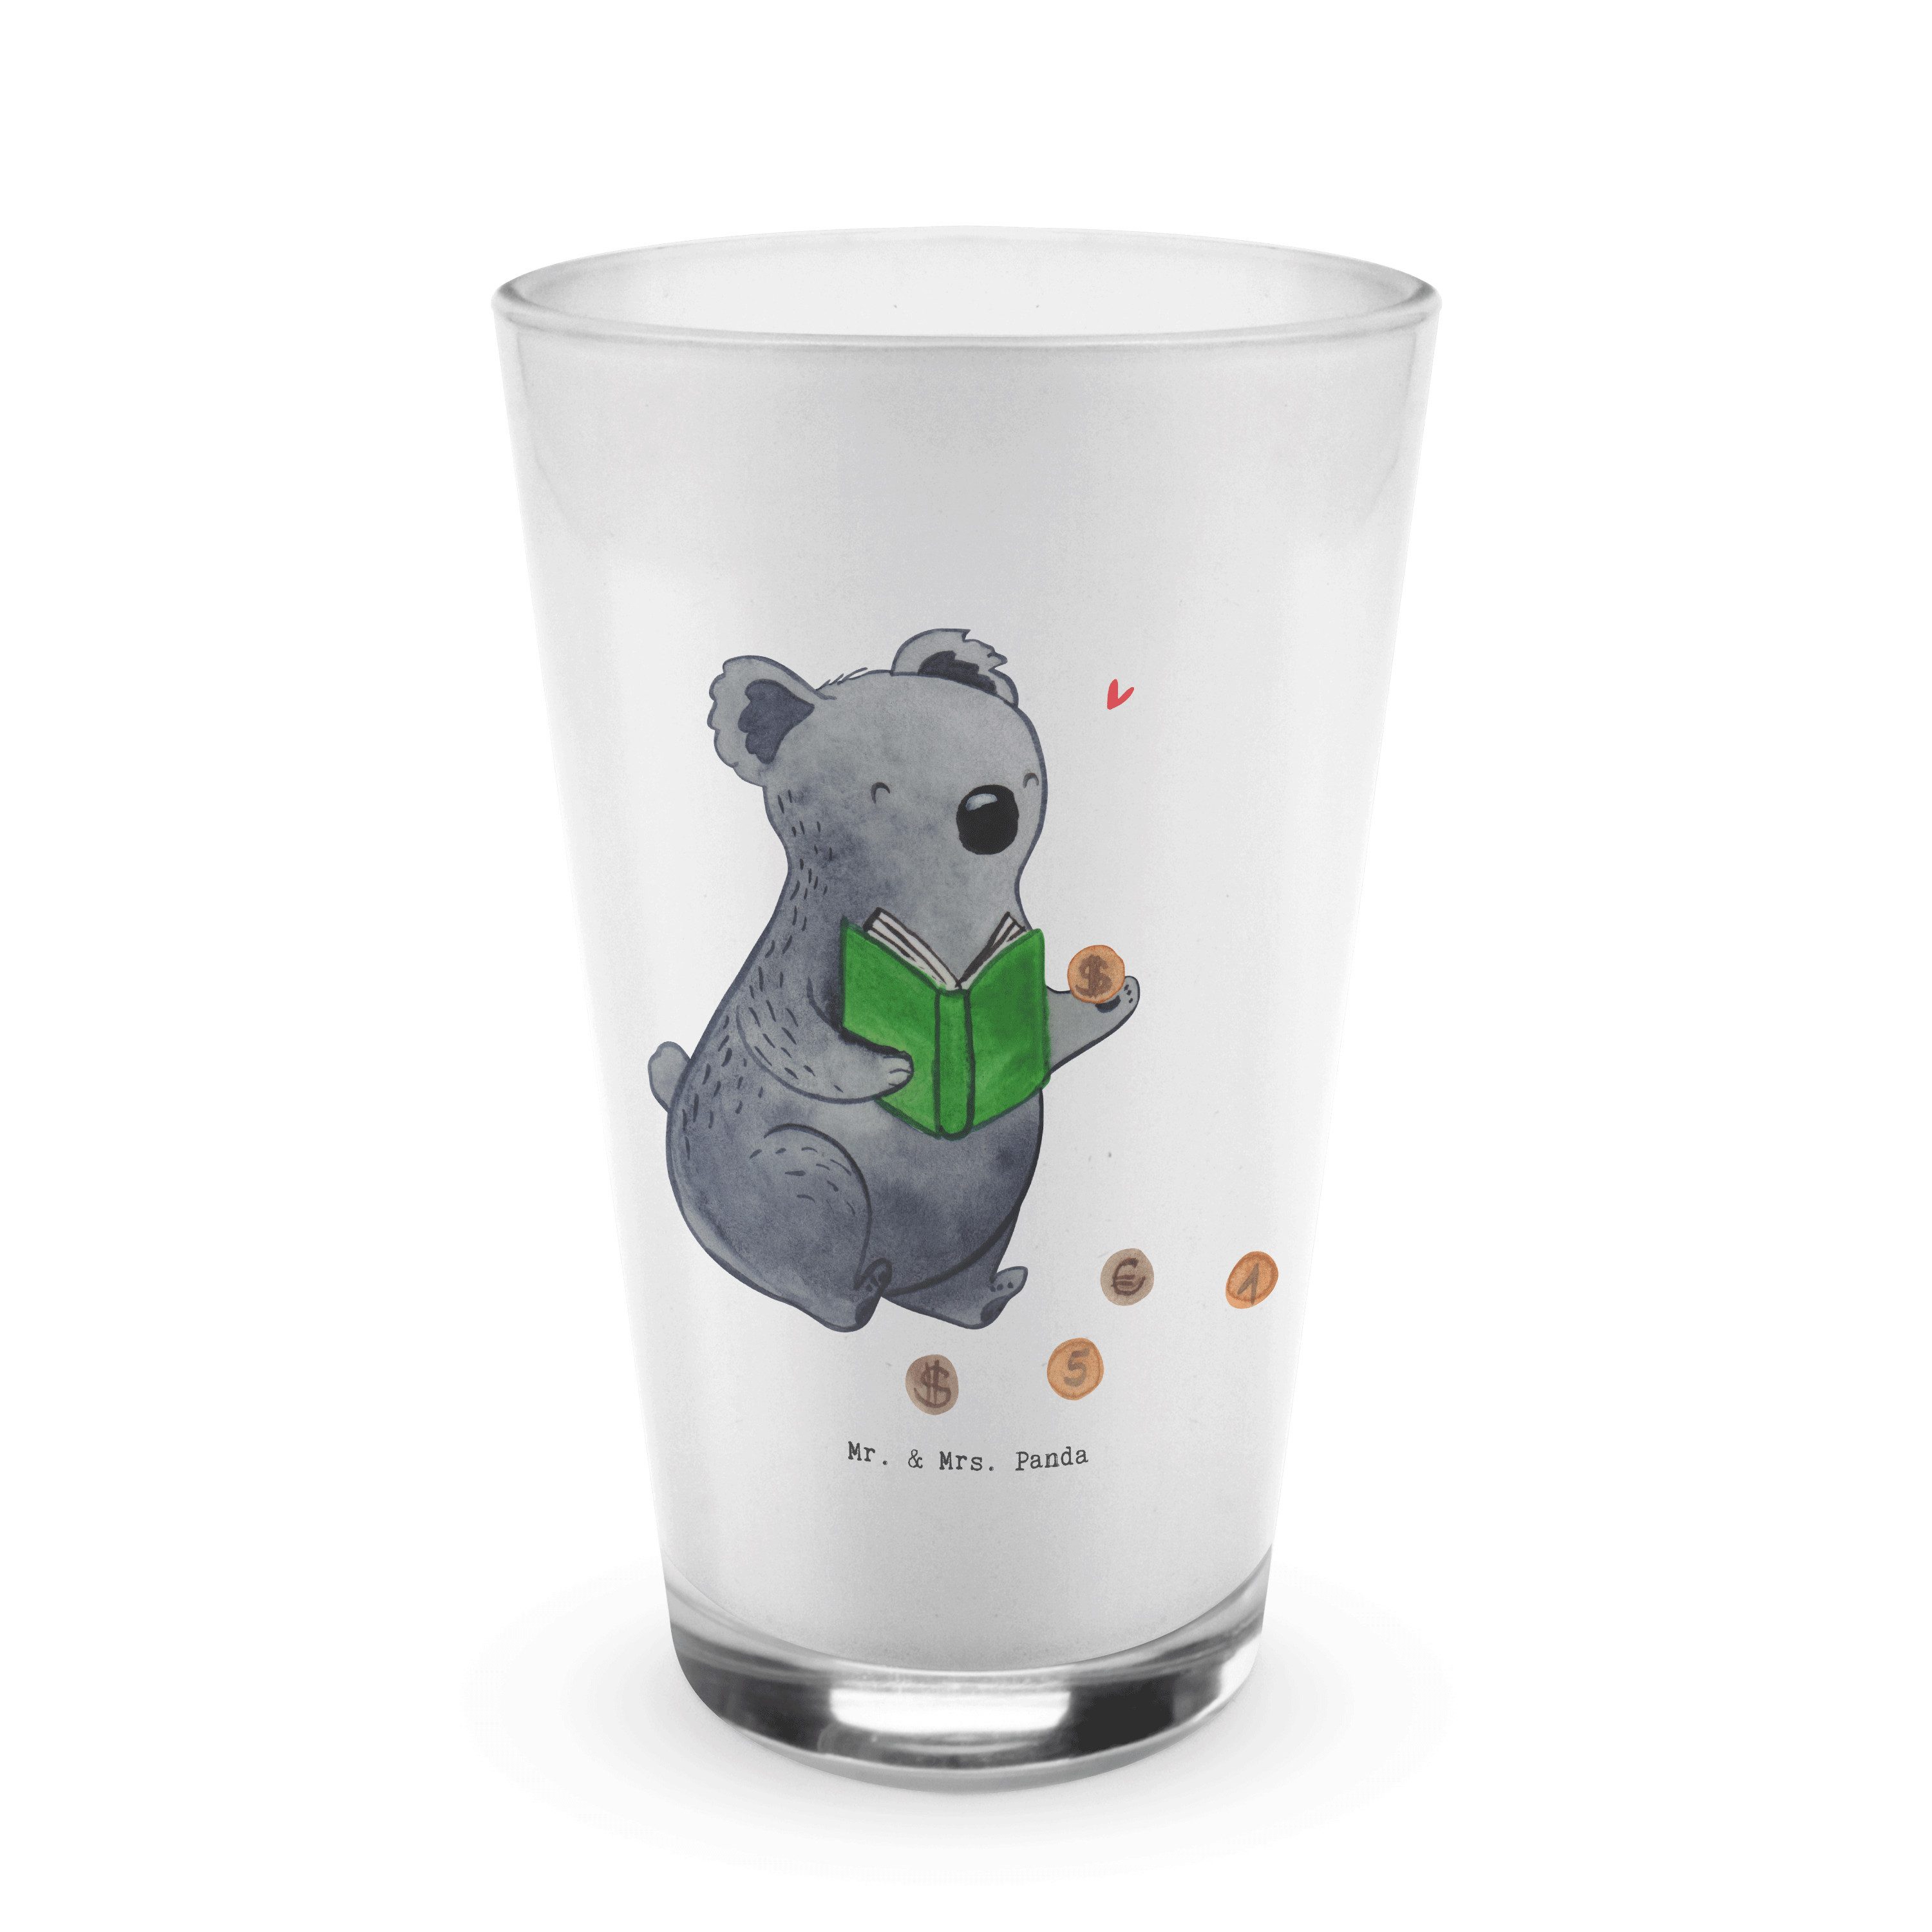 Mr. & Mrs. Panda Glas Koala Münzen sammeln - Transparent - Geschenk, Cappuccino Tasse, Spor, Premium Glas, Edles Matt-Design